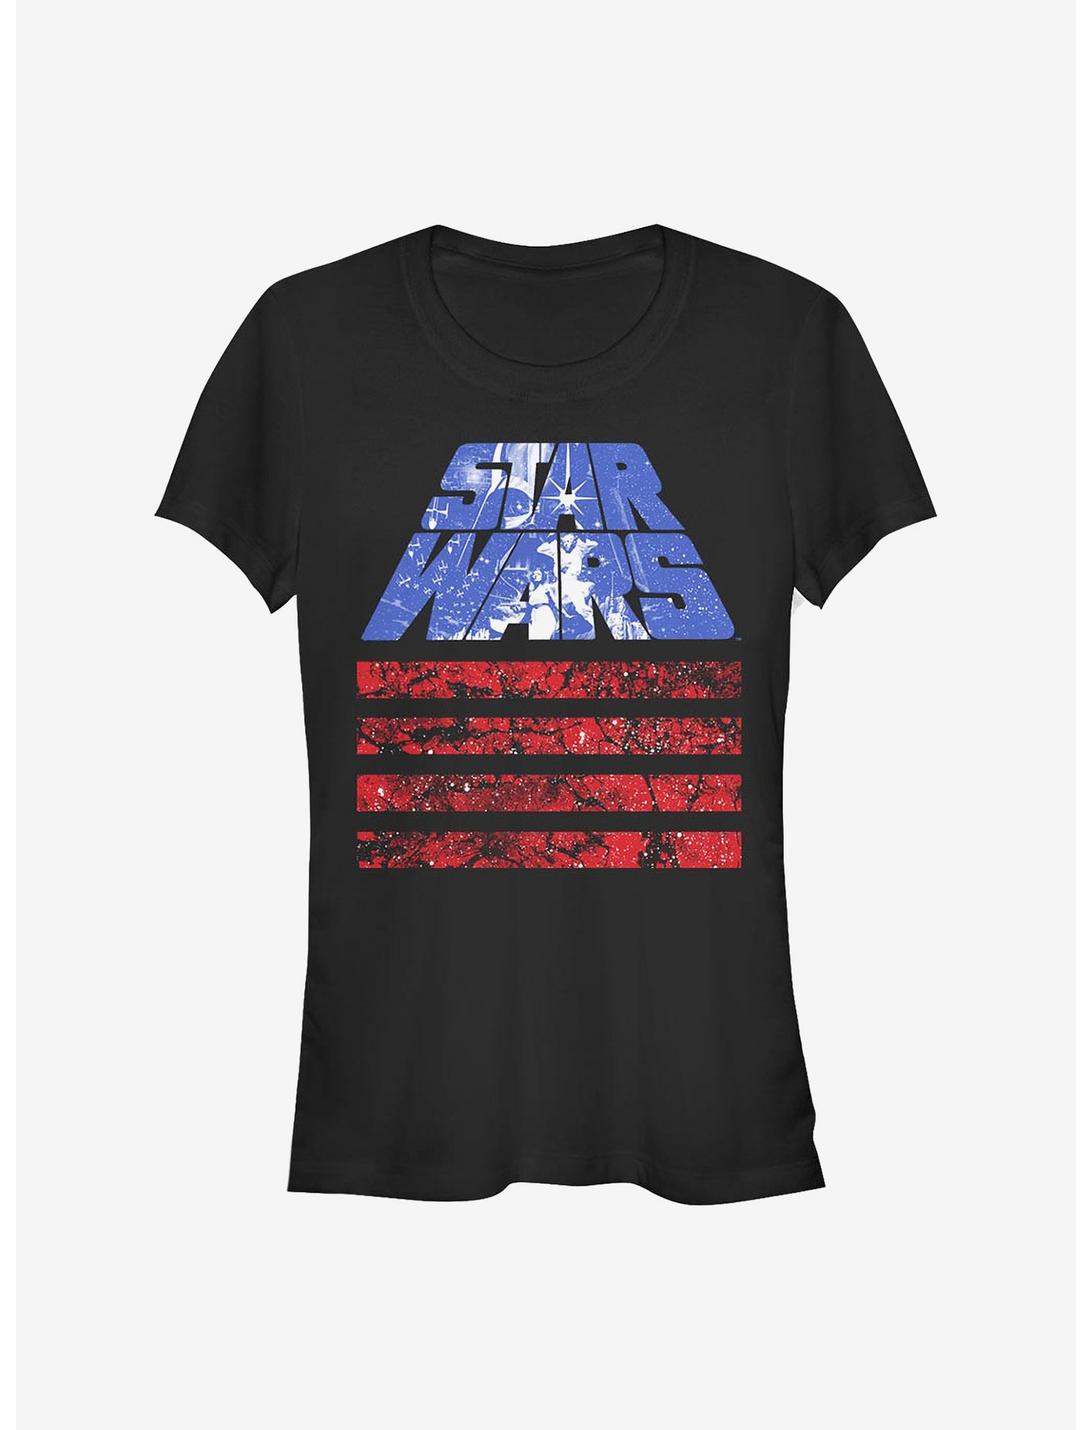 Star Wars Star Glory Girls T-Shirt, , hi-res